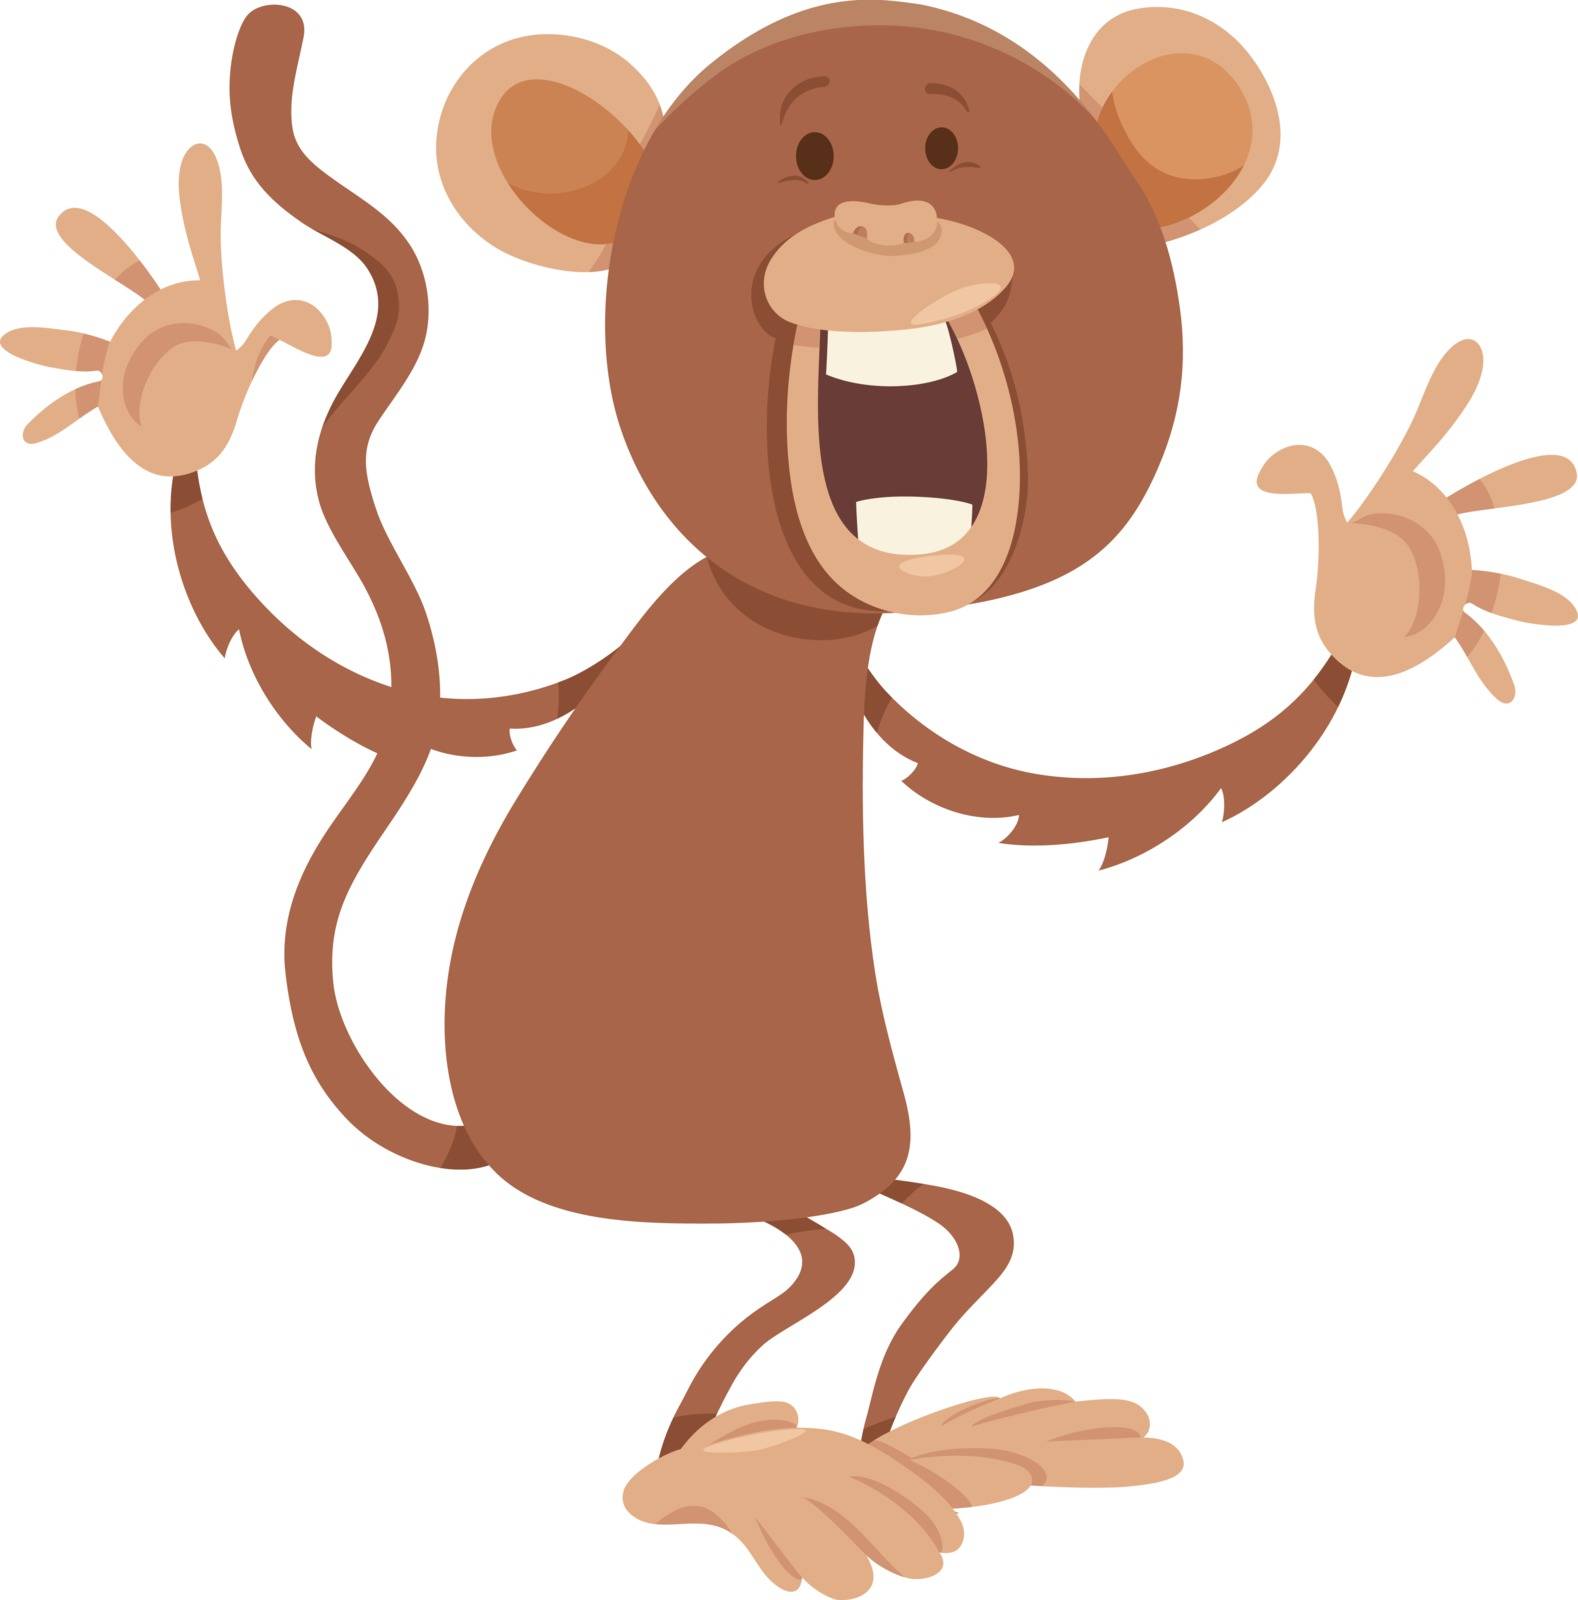 Cartoon Illustration of Funny Monkey Animal Character